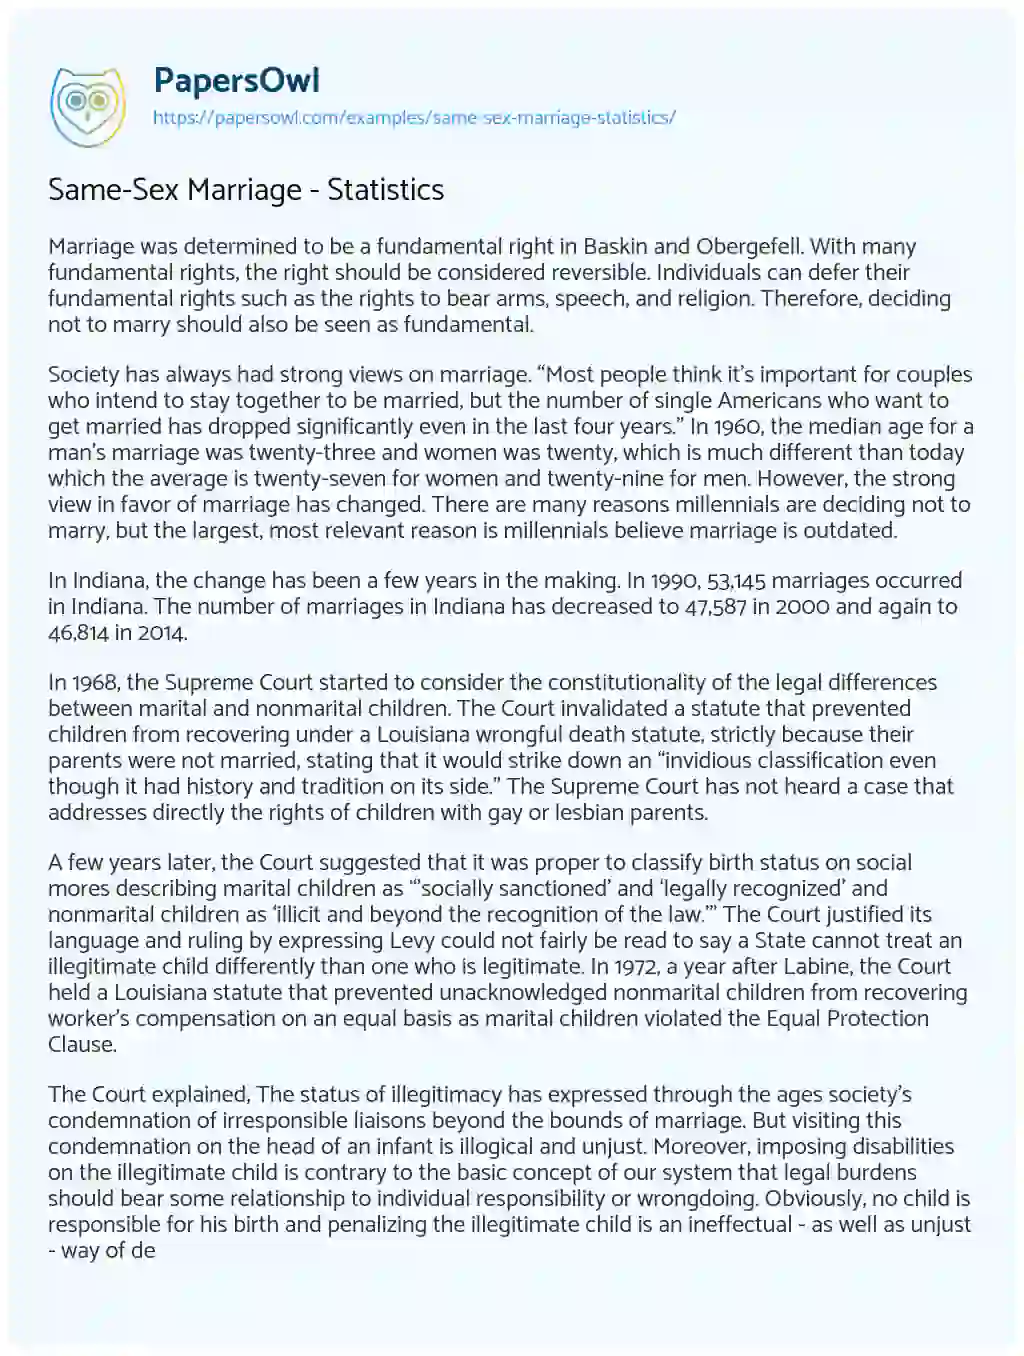 Same-Sex Marriage – Statistics essay